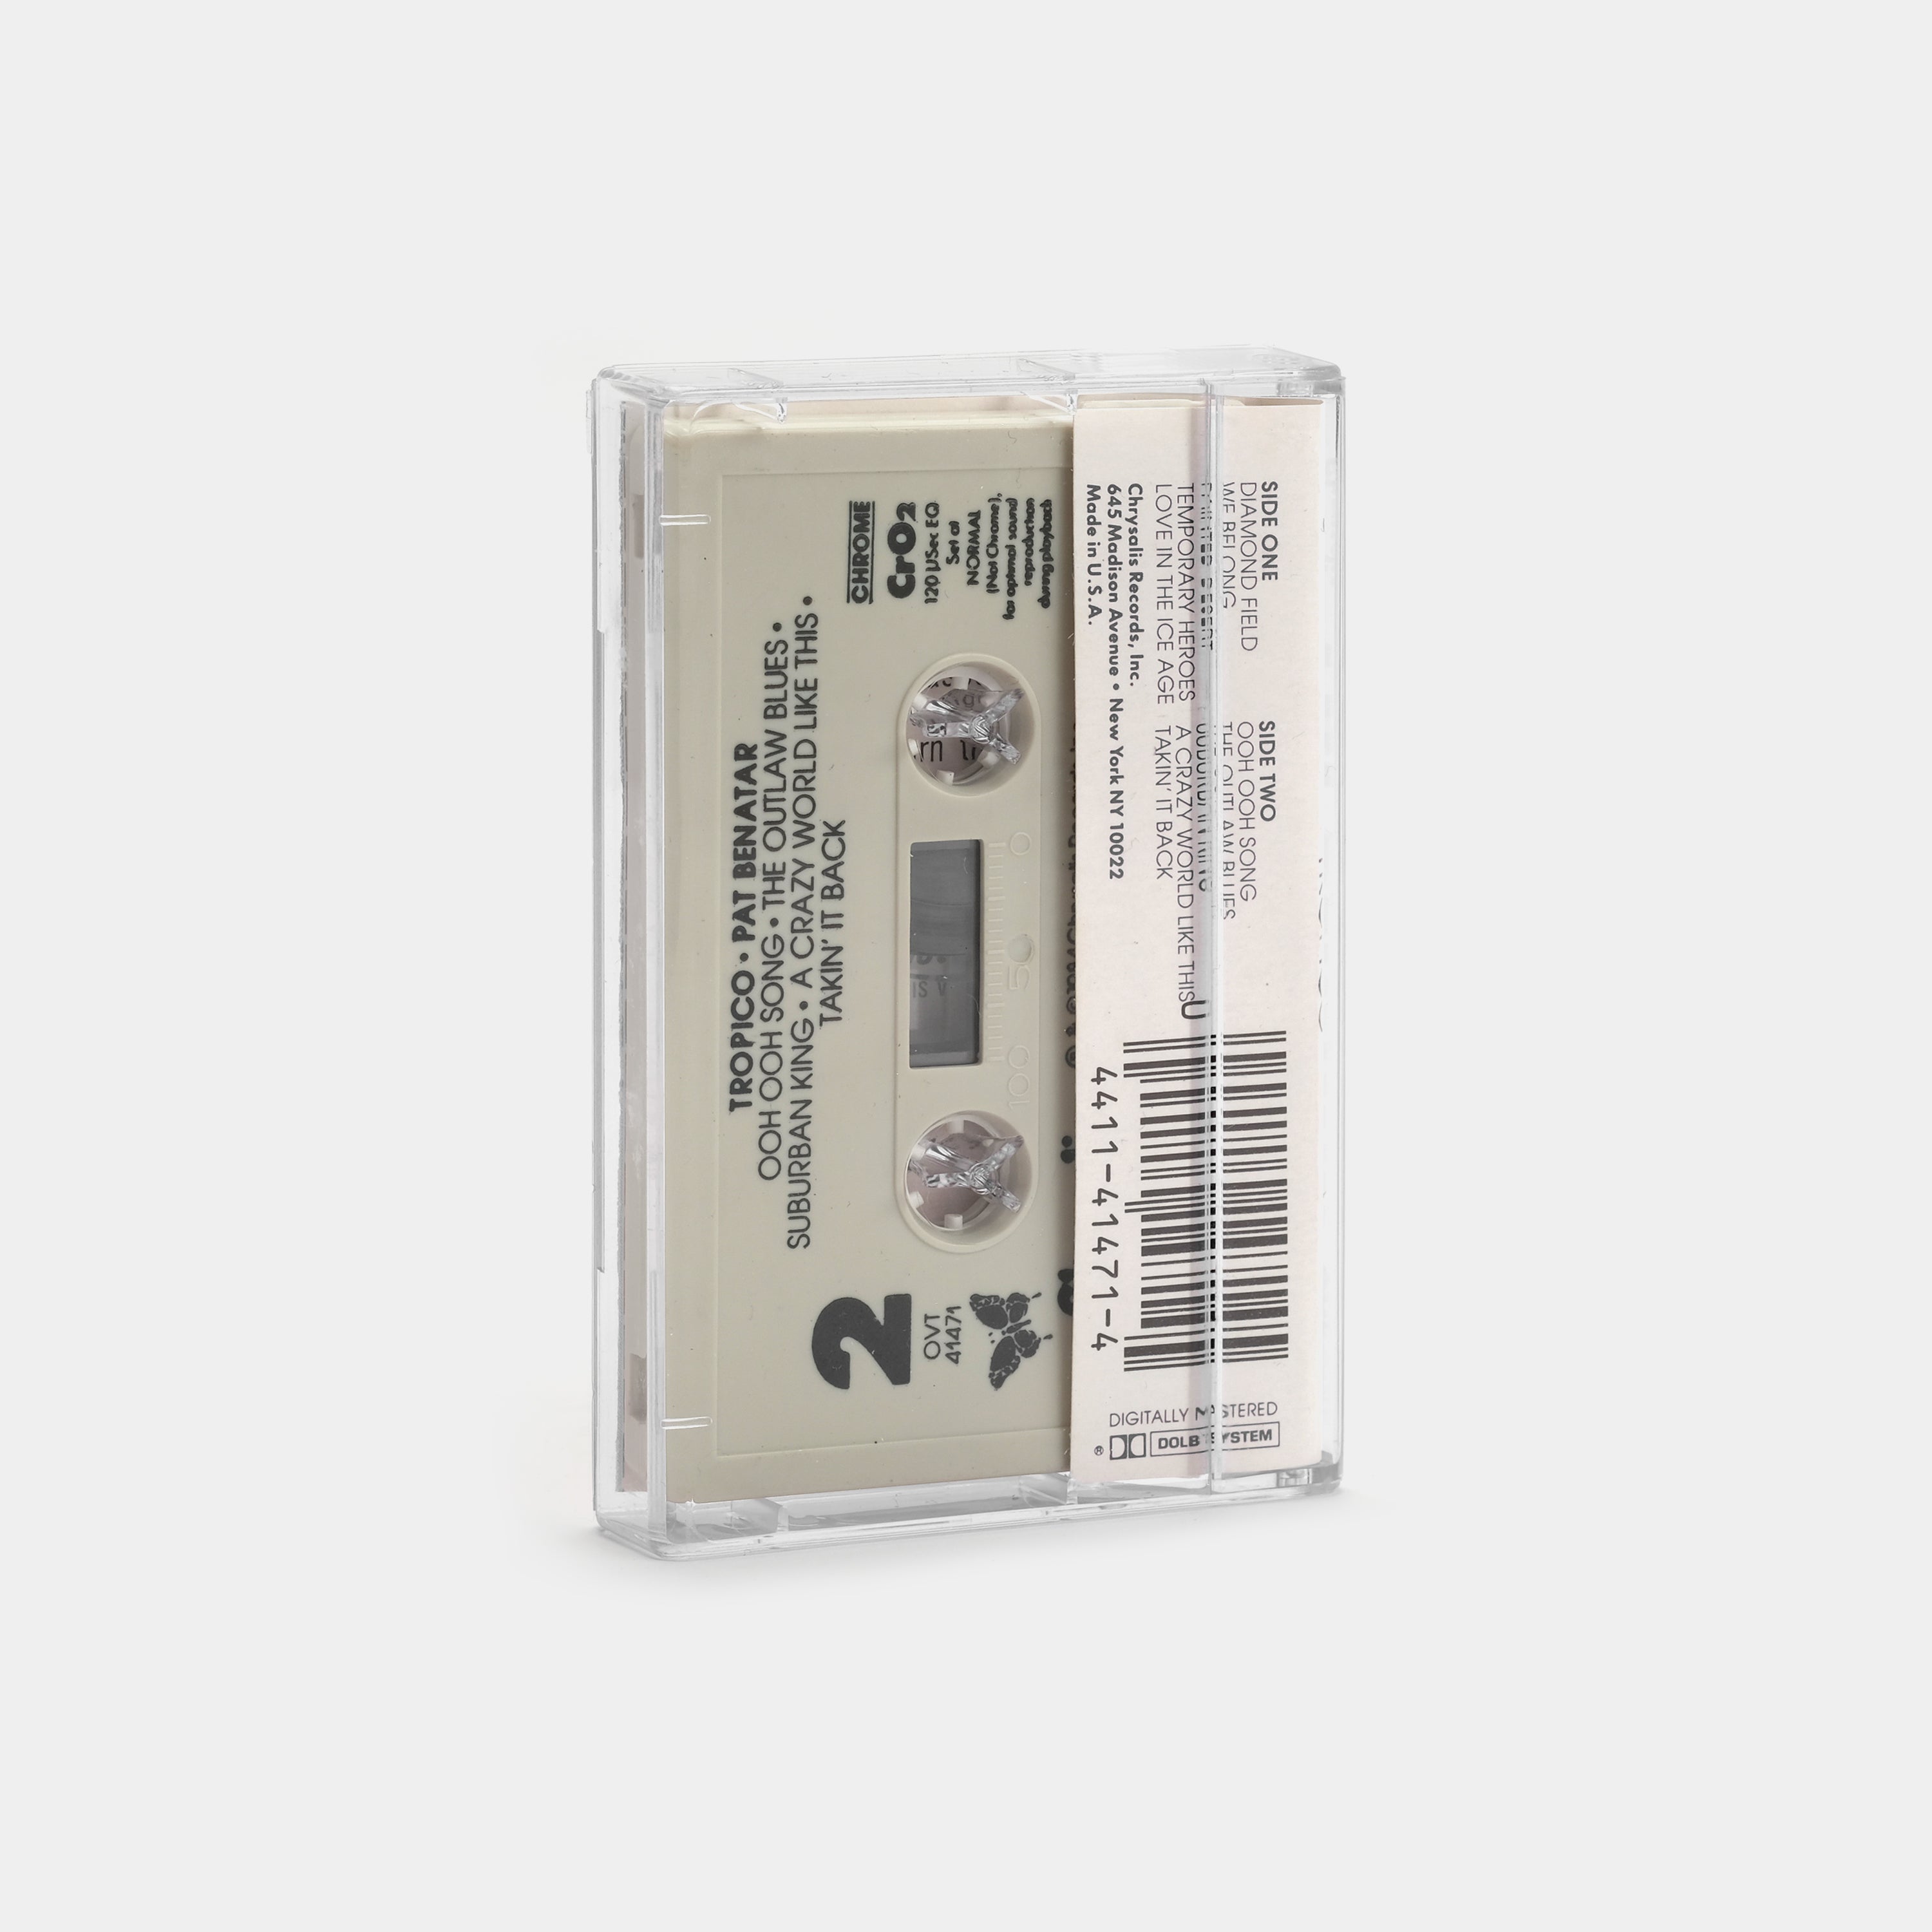 Pat Benatar - Tropico Cassette Tape